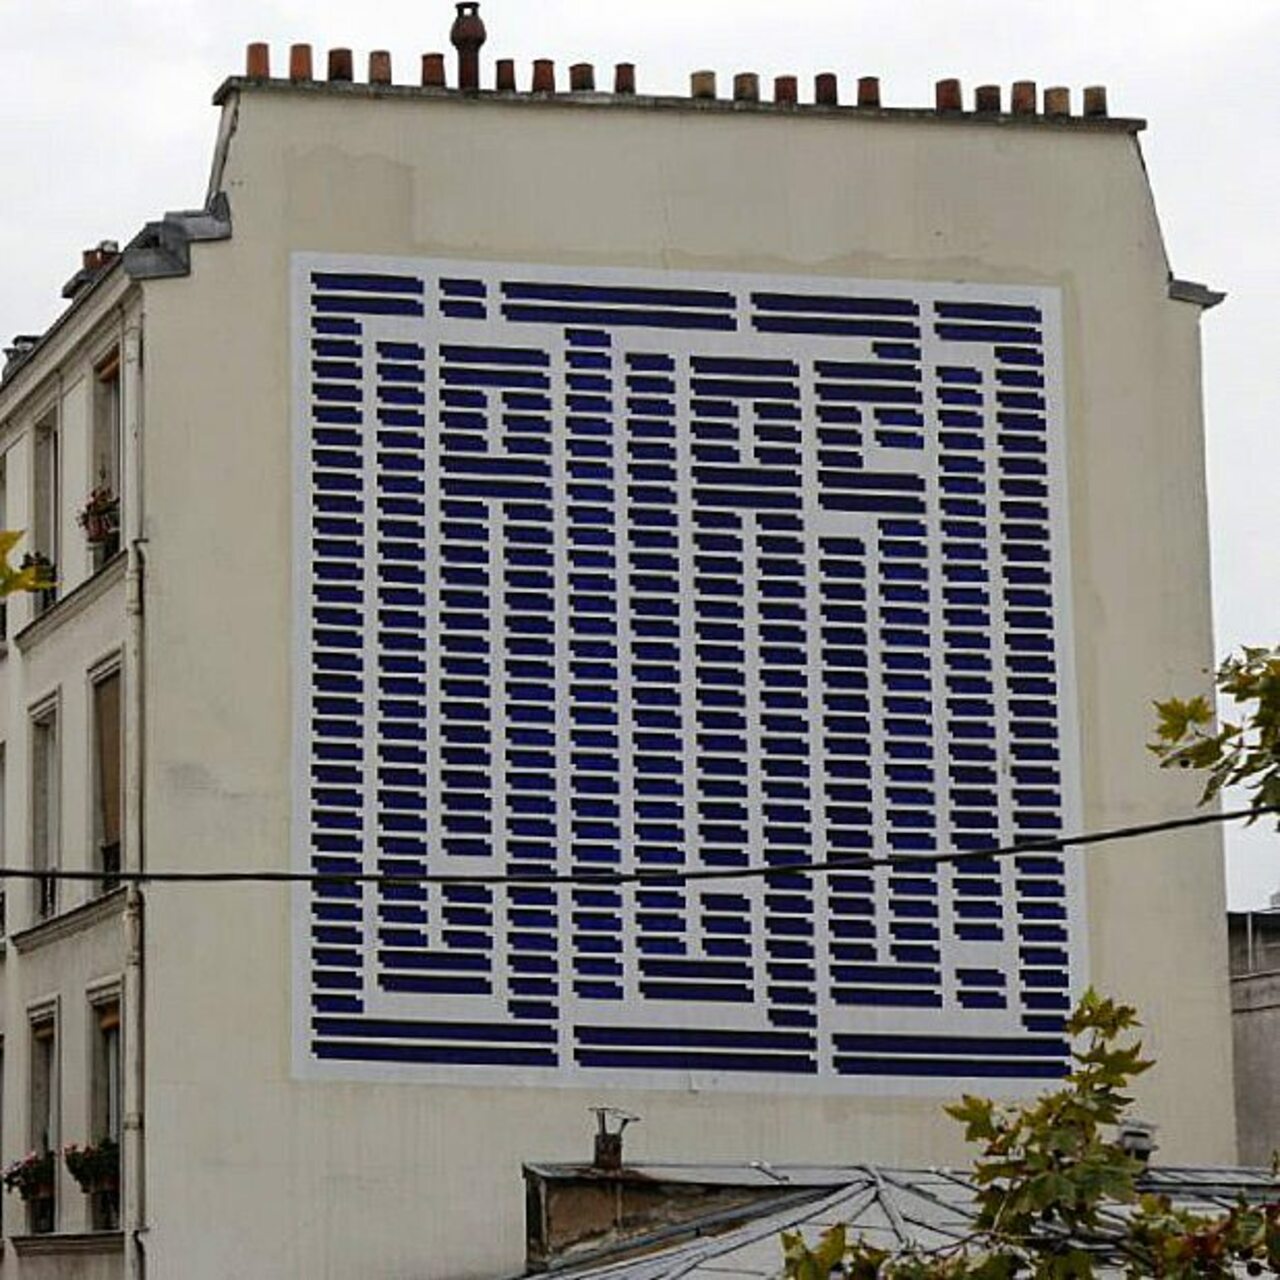 RT @circumjacent_fr: #Paris #graffiti photo by @jpoesse http://ift.tt/1KuYB7Z #StreetArt https://t.co/3KJX6EA5wd